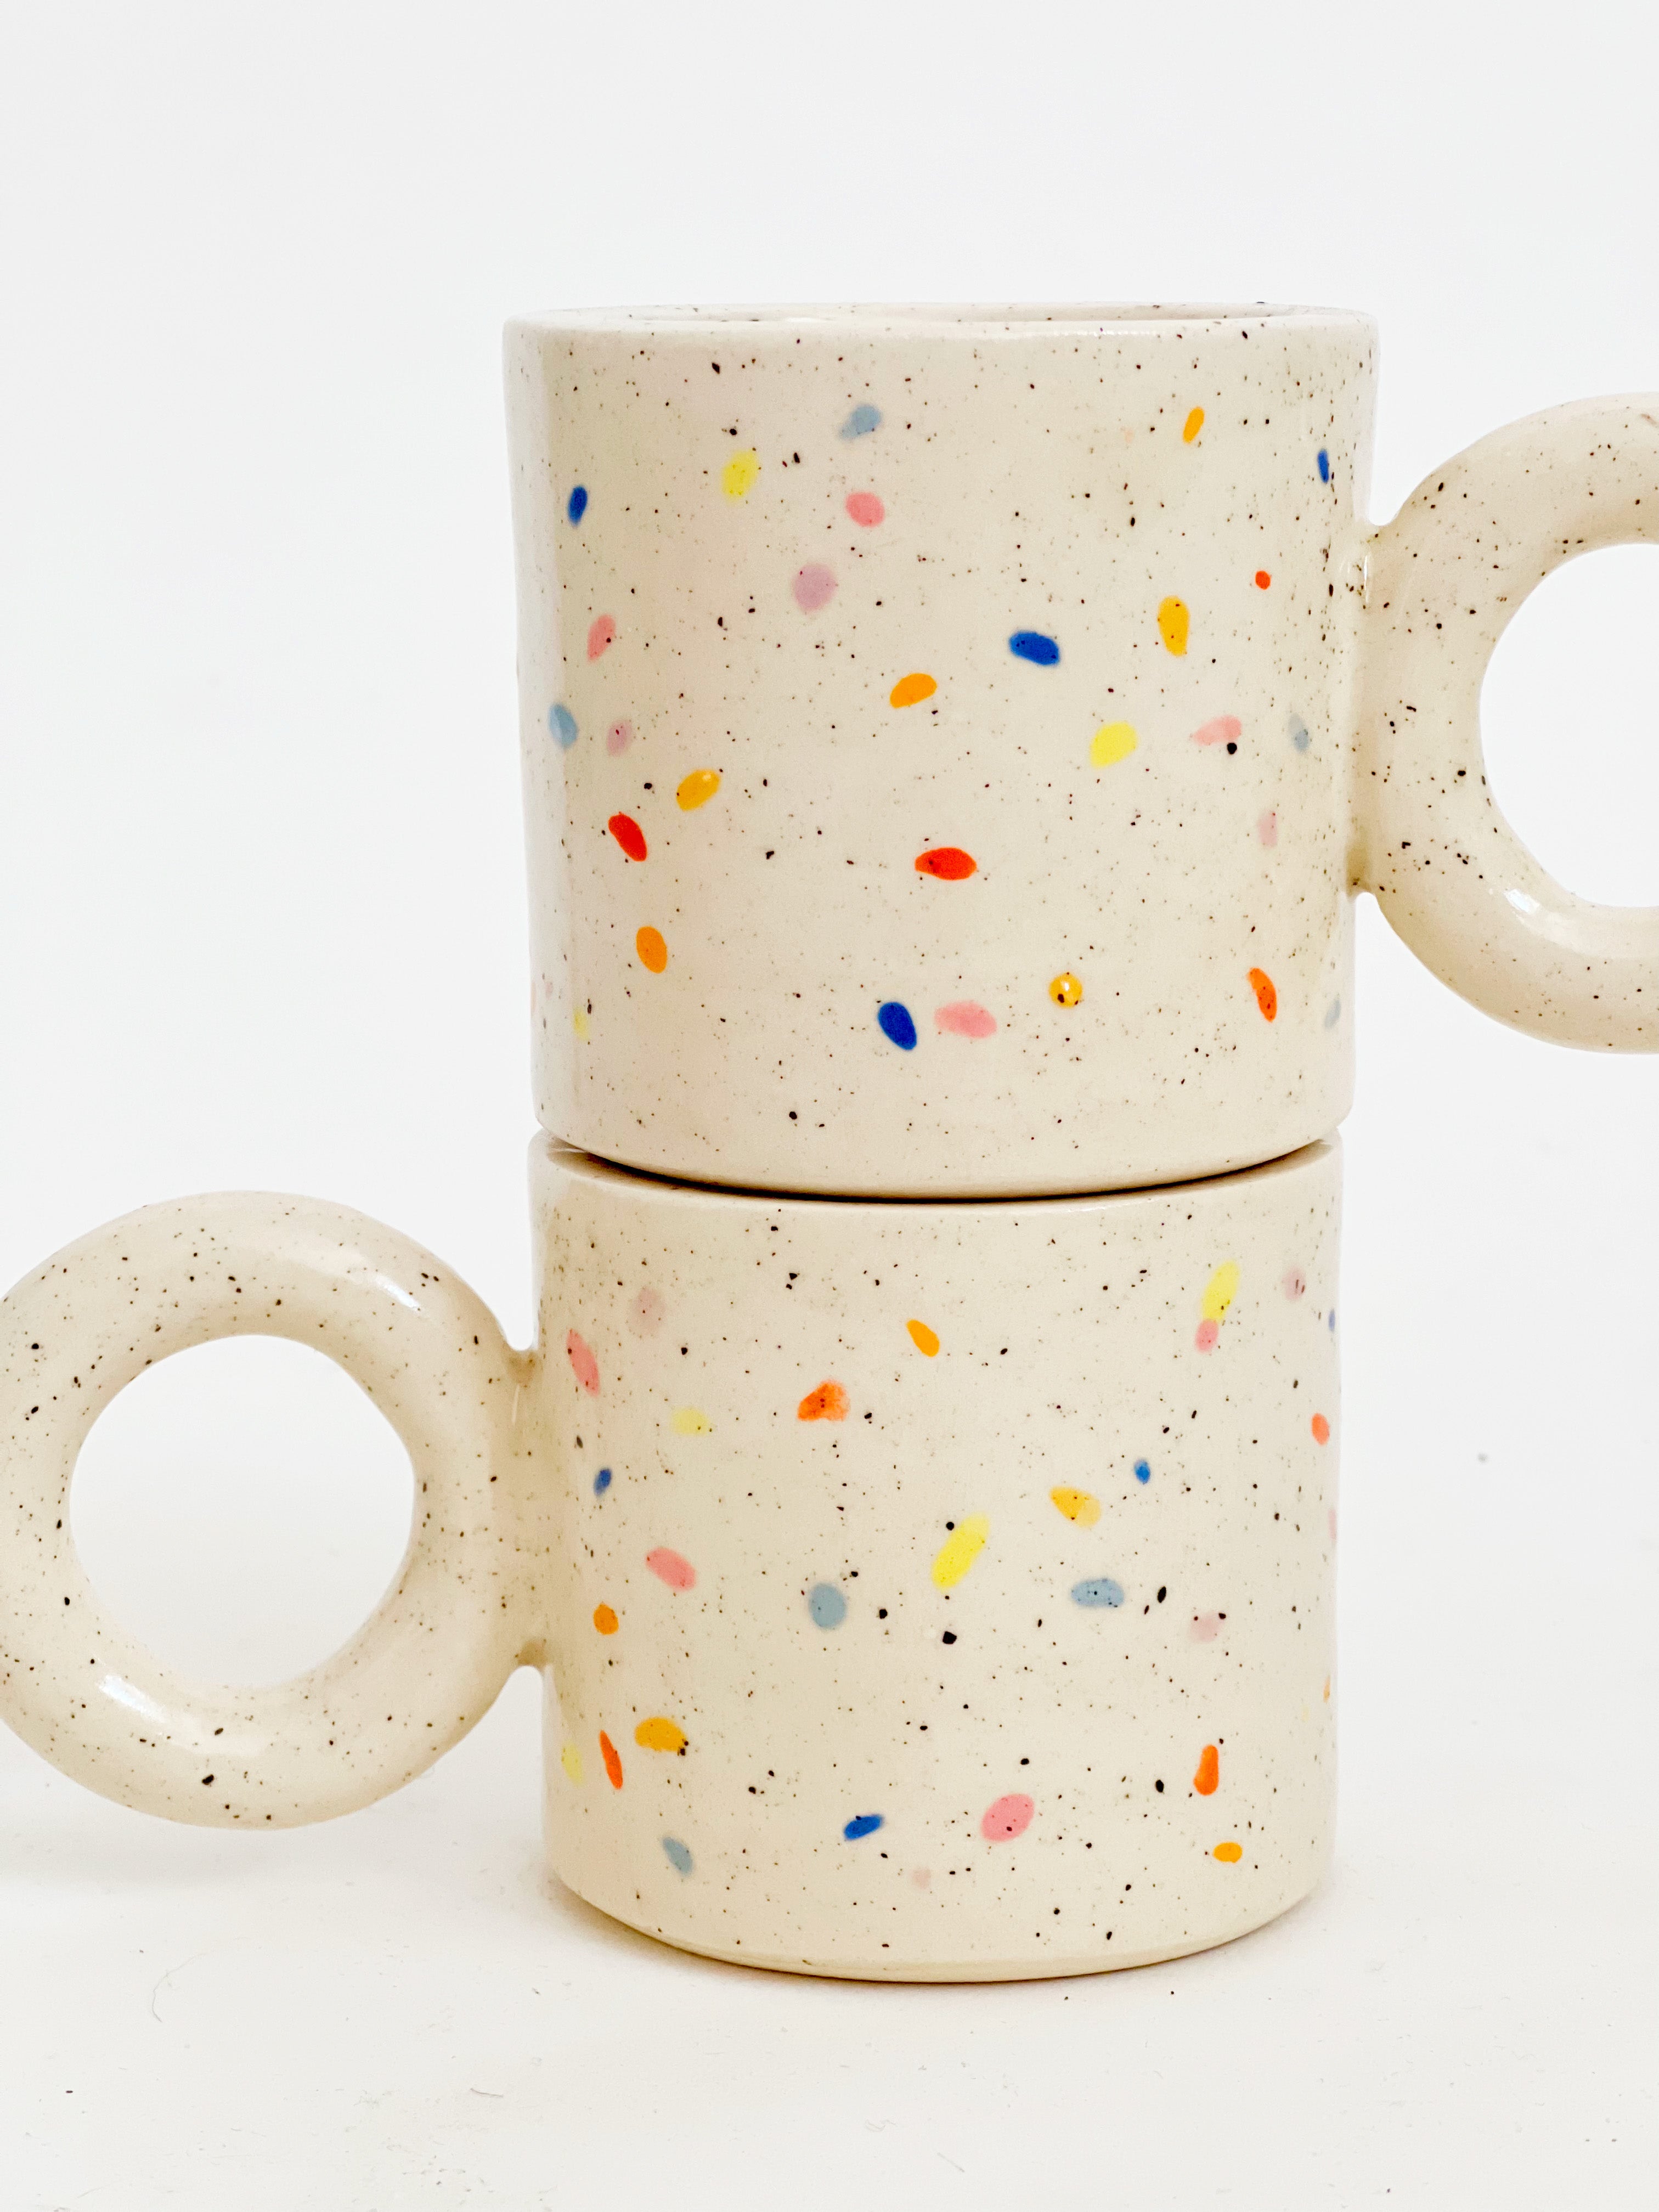 5oz Double Sprinkles Mug - Multi colors